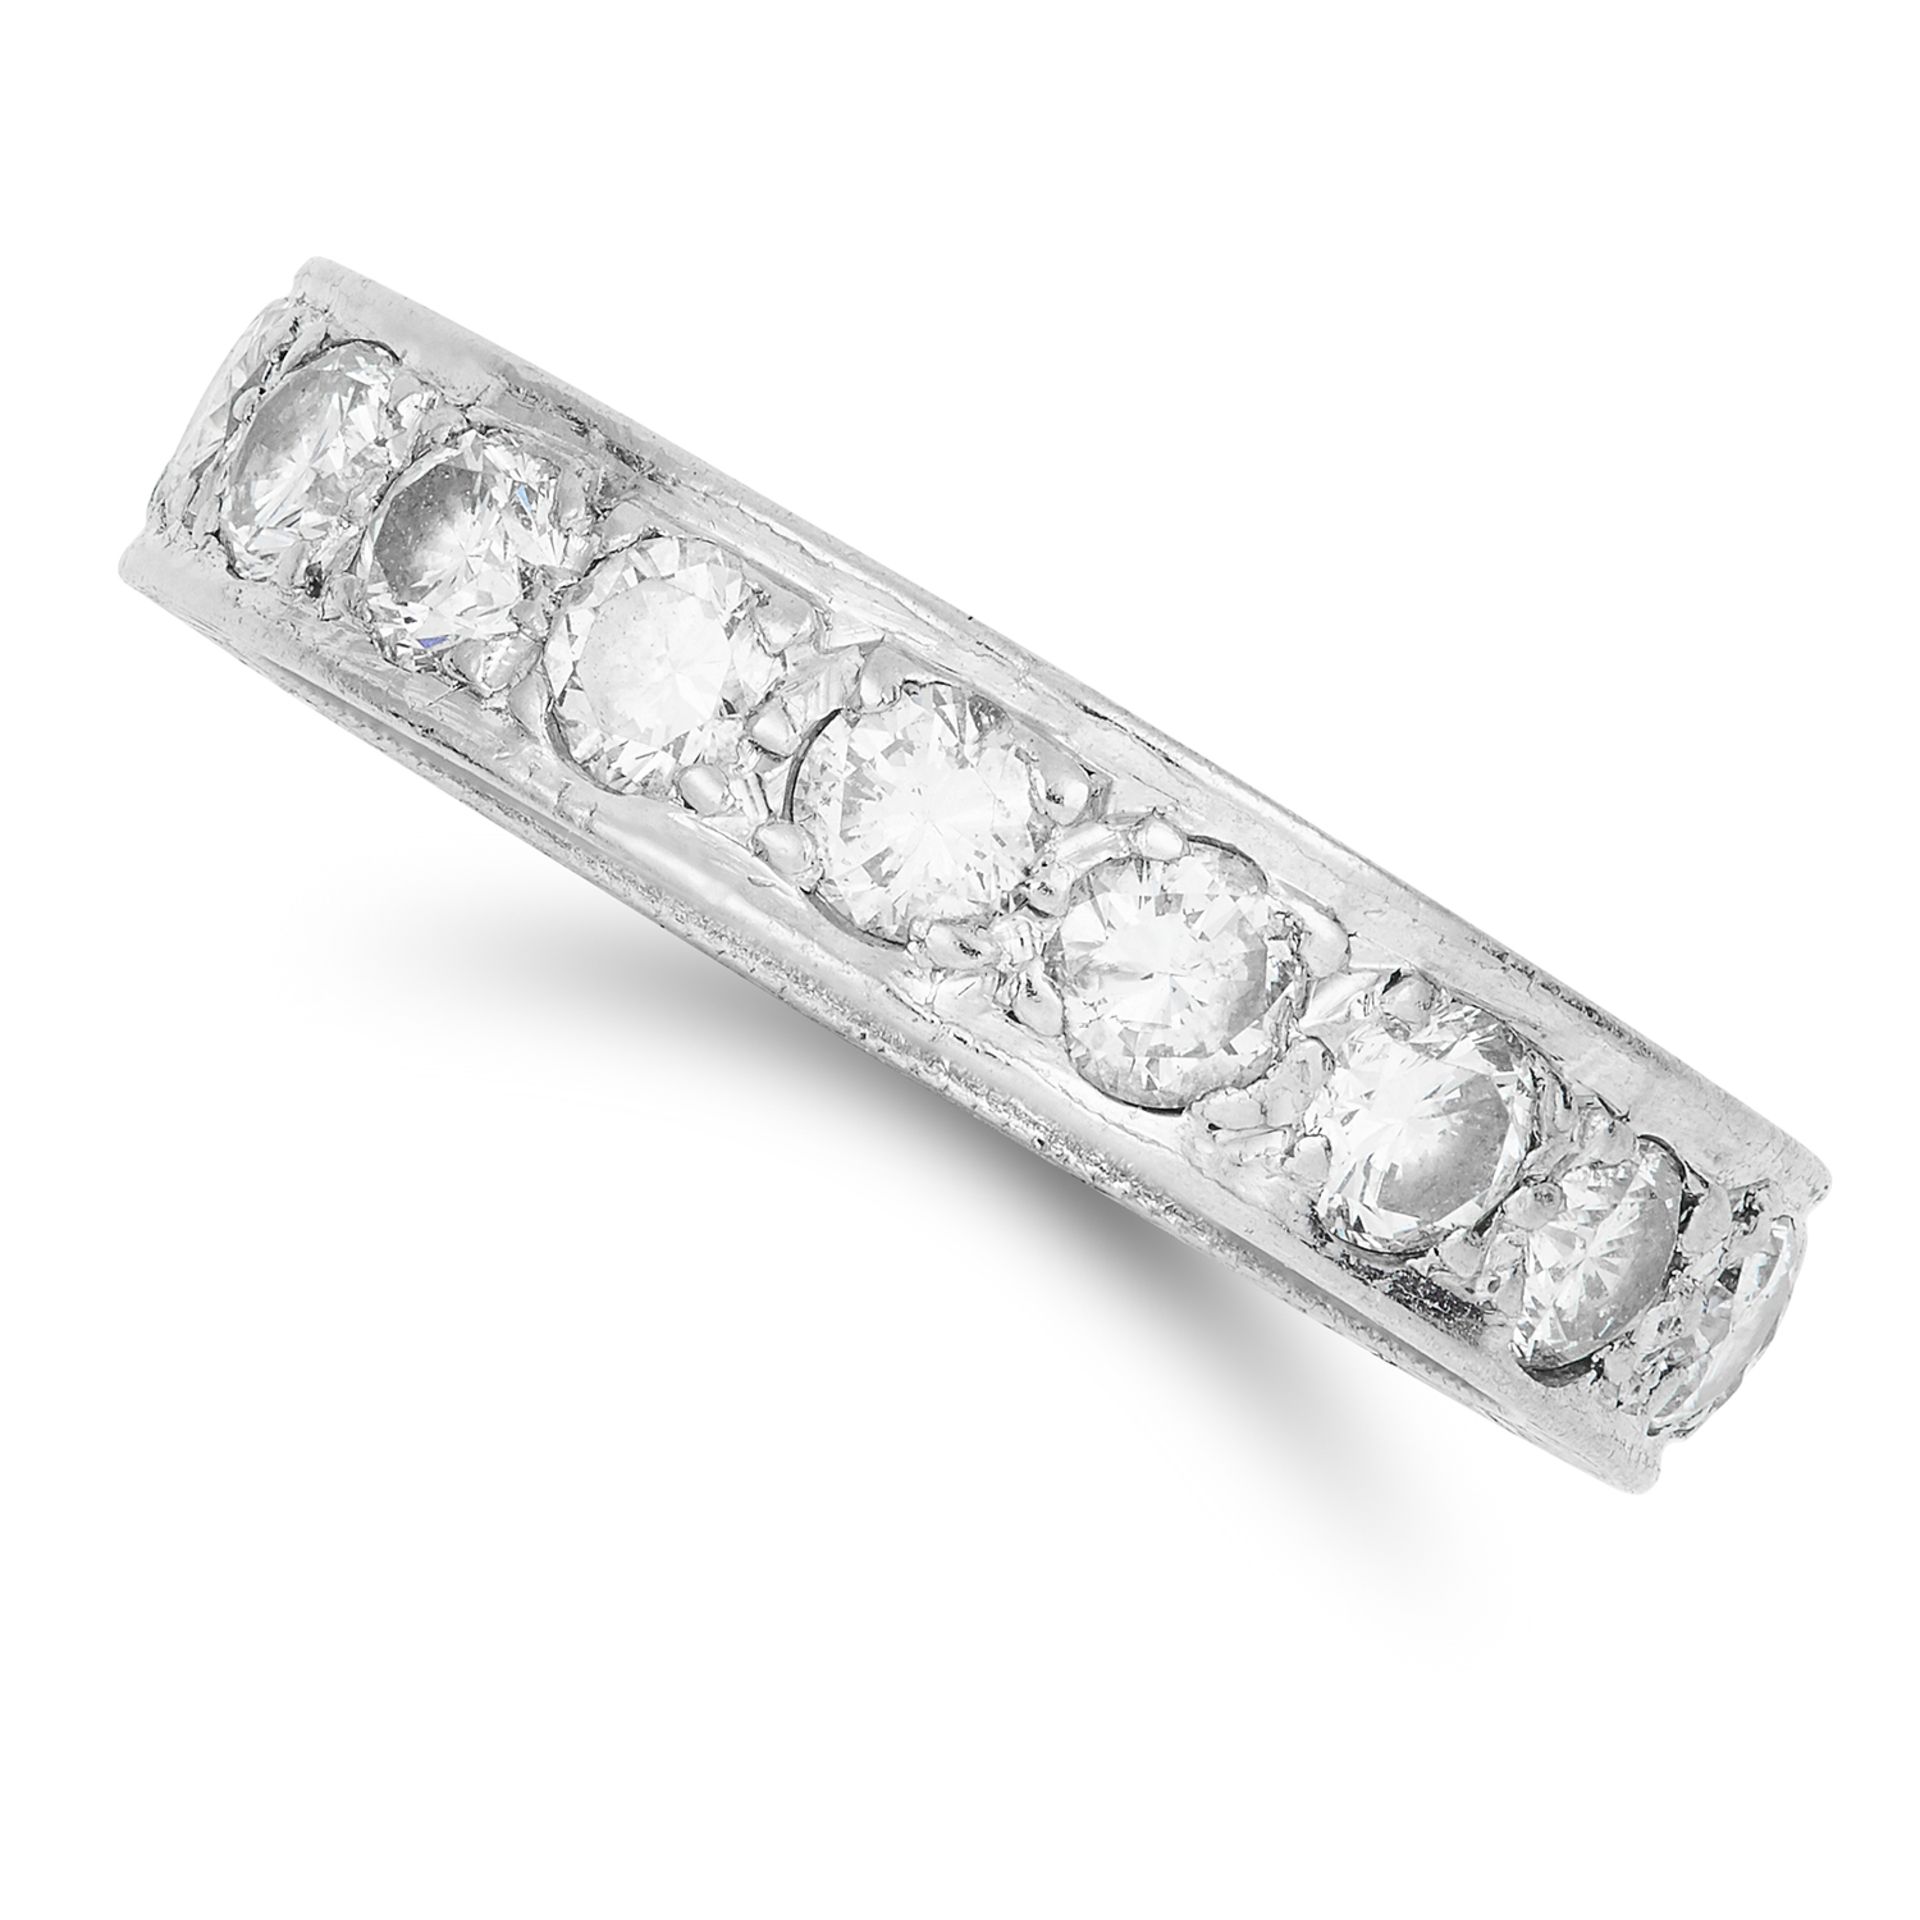 1.80 CARAT DIAMOND ETERNITY RING set all around with round cut diamonds totalling 1.80 carats,